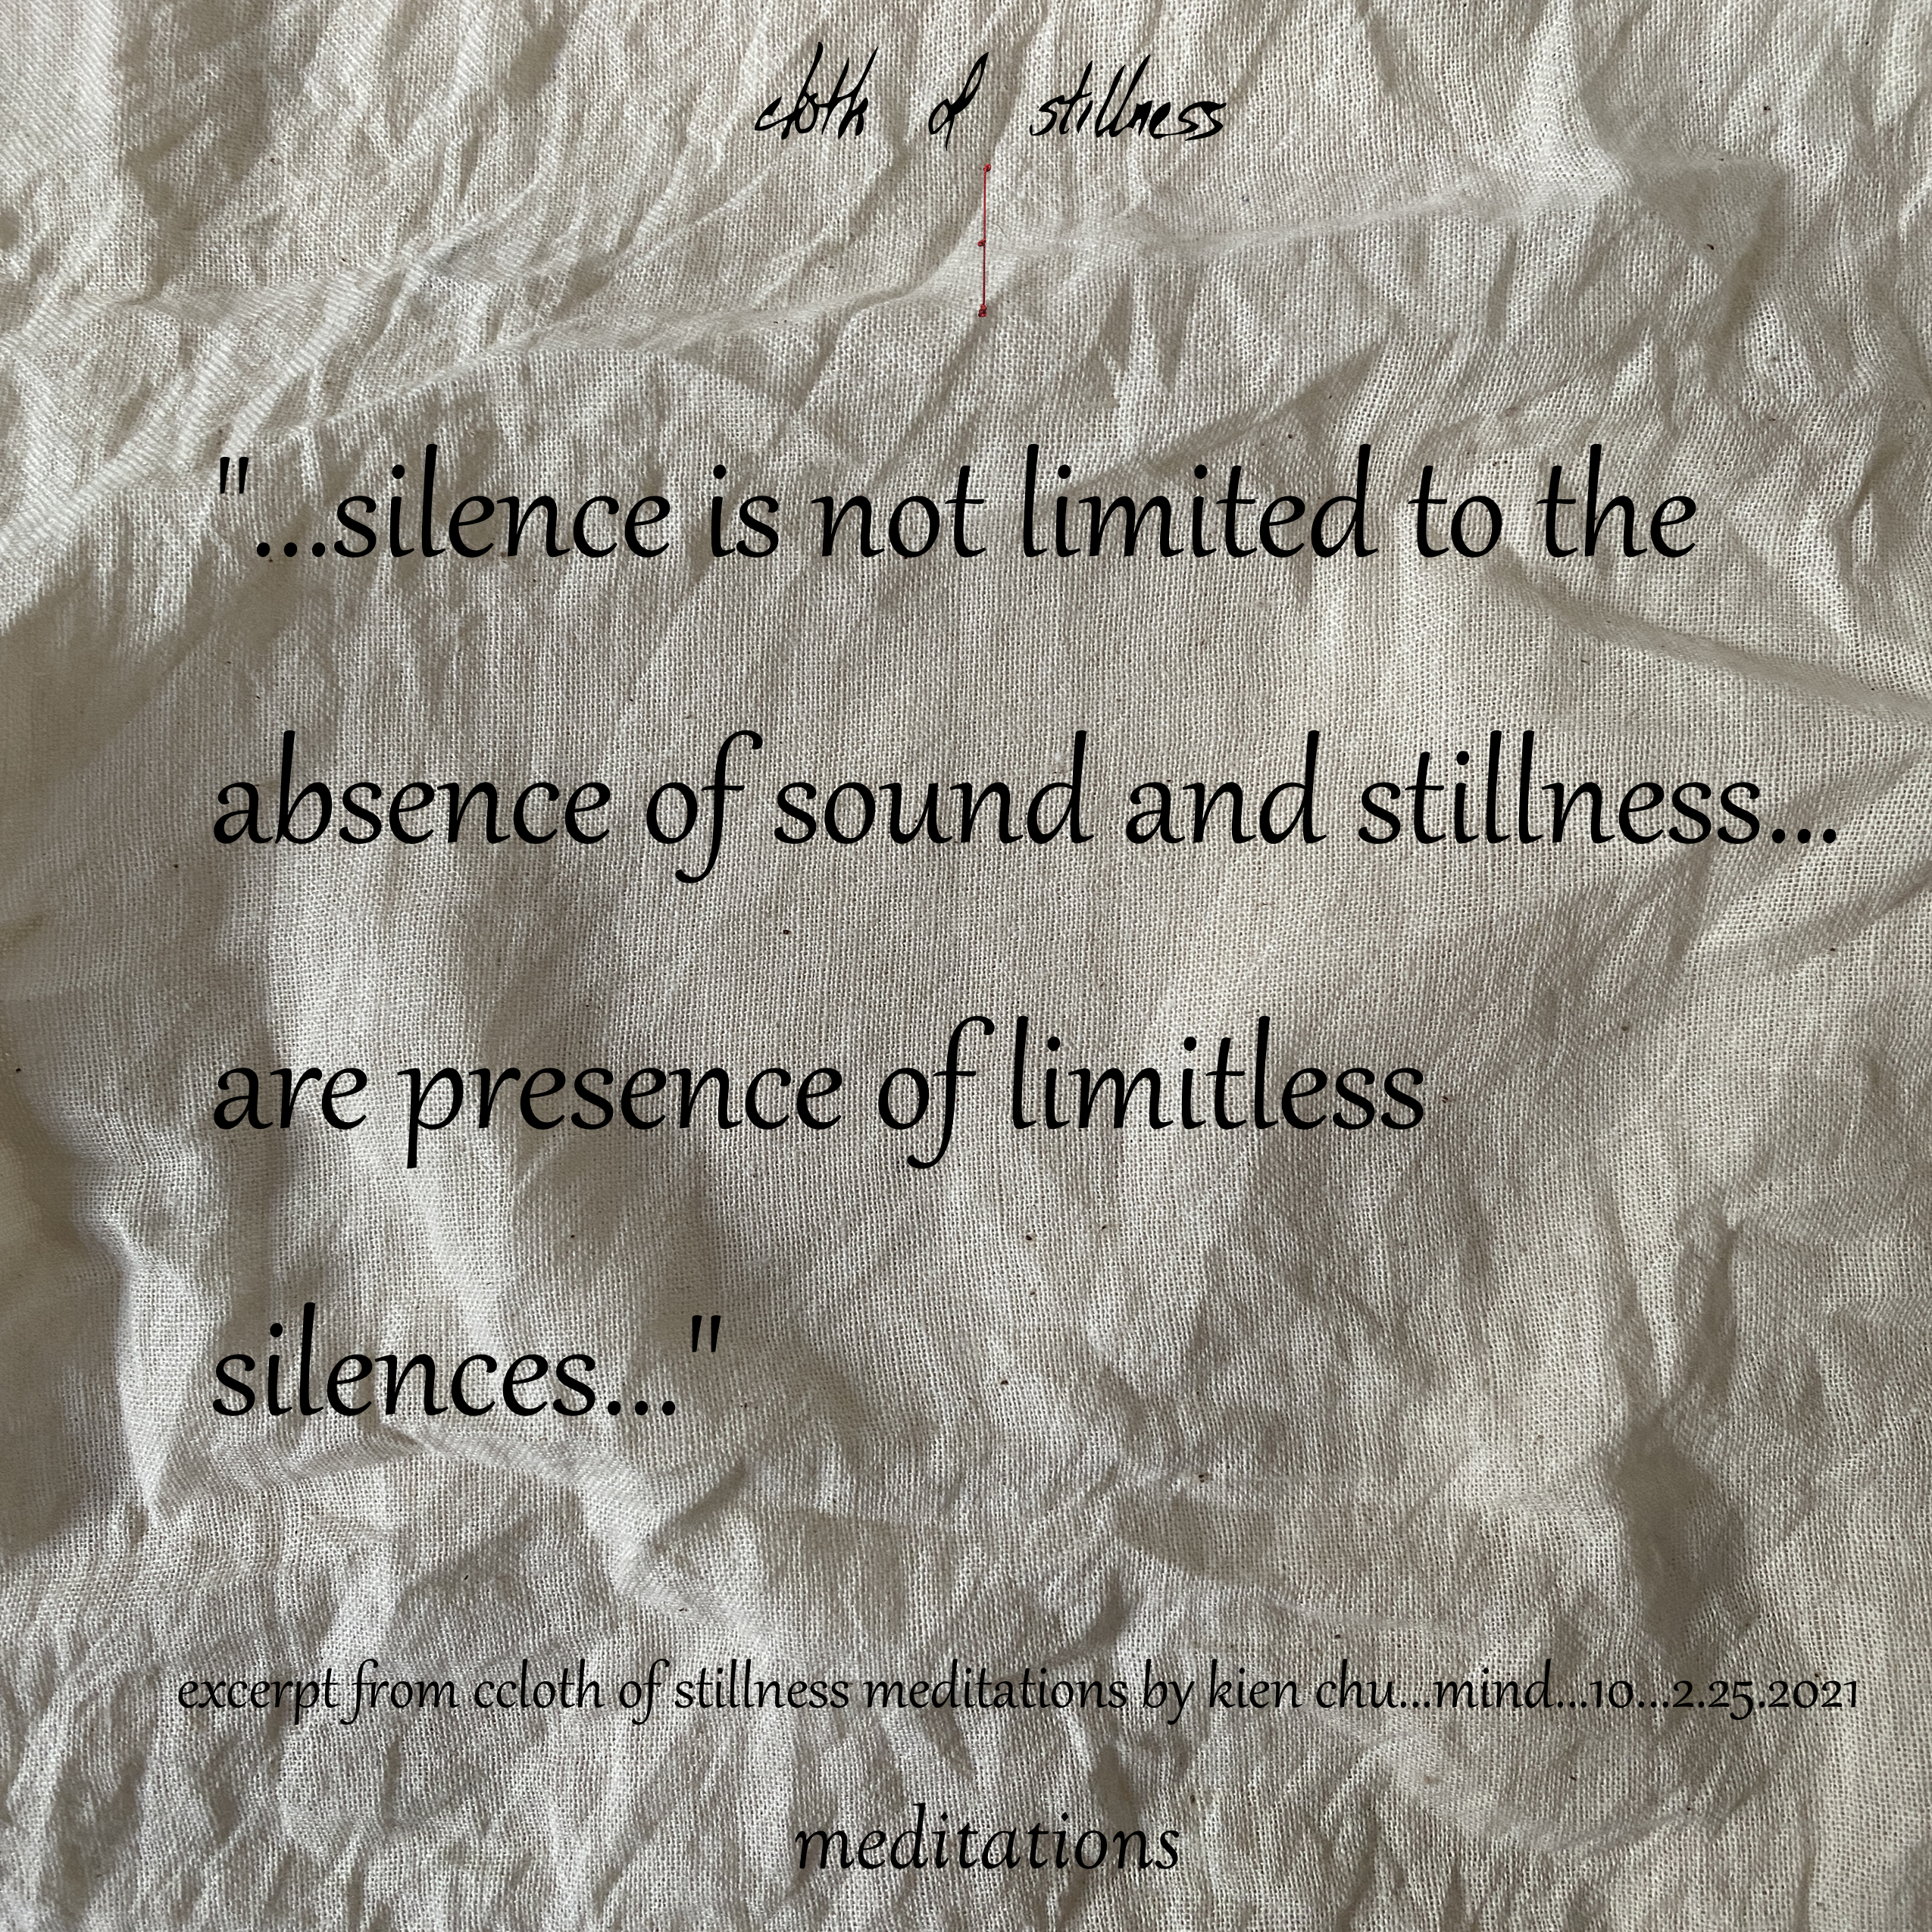 cloth of stillness meditations by kien chu...mind...10 minutes...2.25.2021...ready to buy